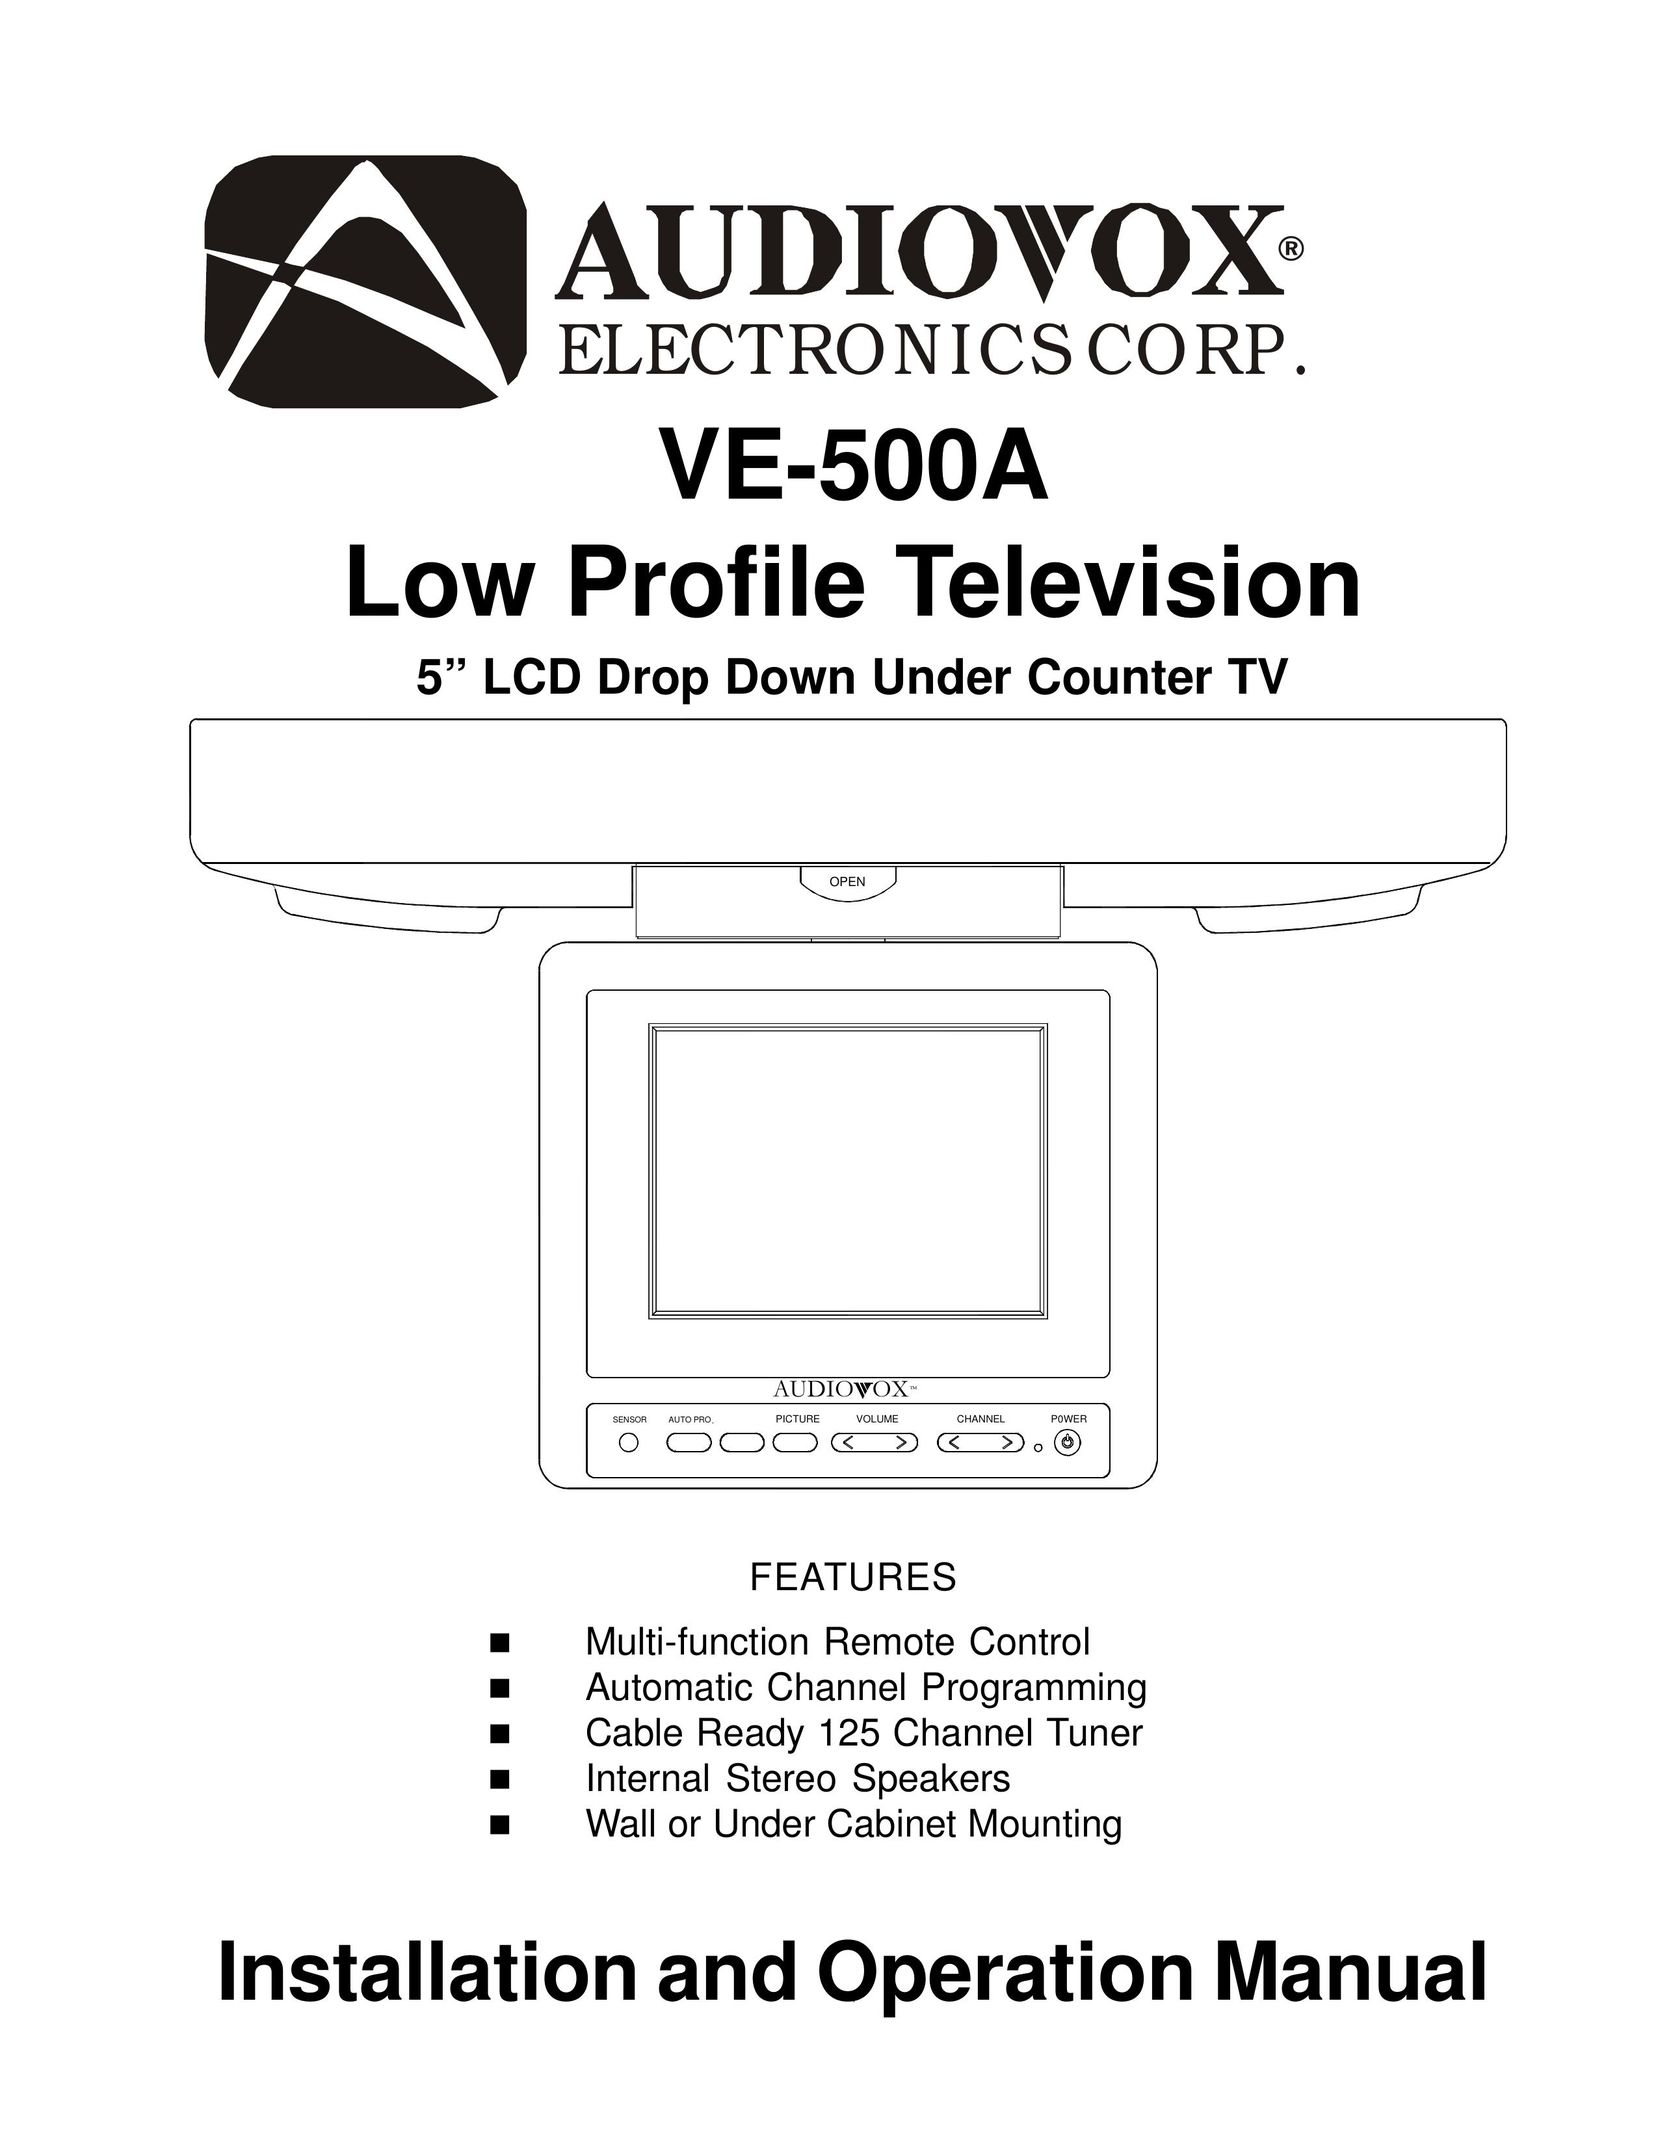 Audiovox VE-500A DVD Player User Manual